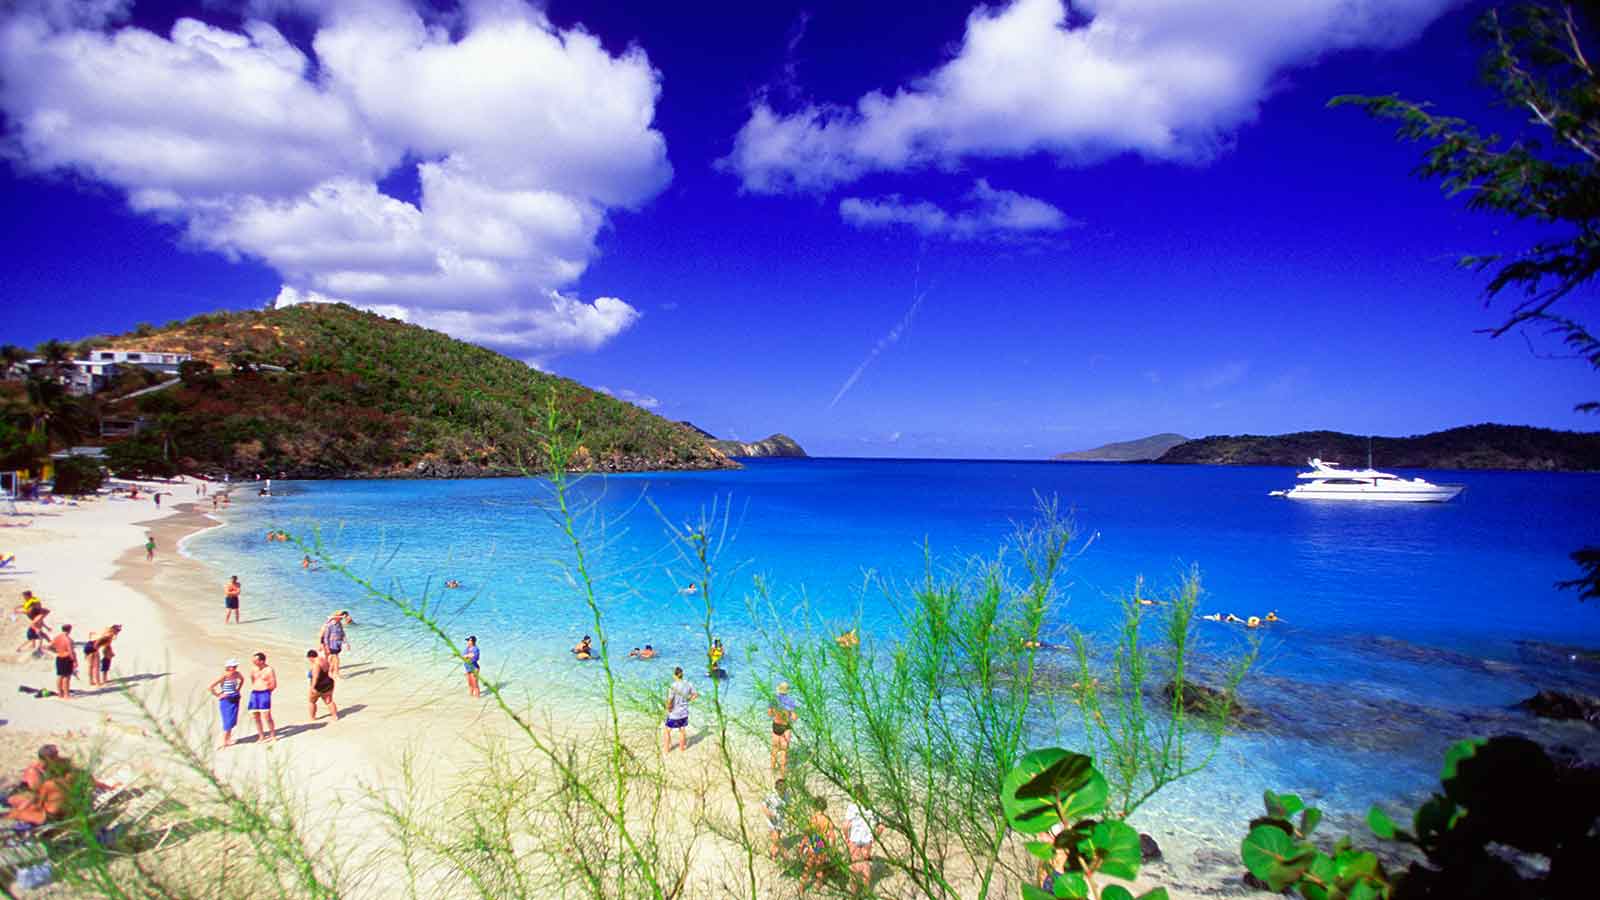 Southern Caribbean Holiday Cruise - Charlotte Amalie, St. Thomas Google image from https://www.celebritycruises.co.uk/images/itineraries_20-79937_stt-1600x900-st-thomas.jpg